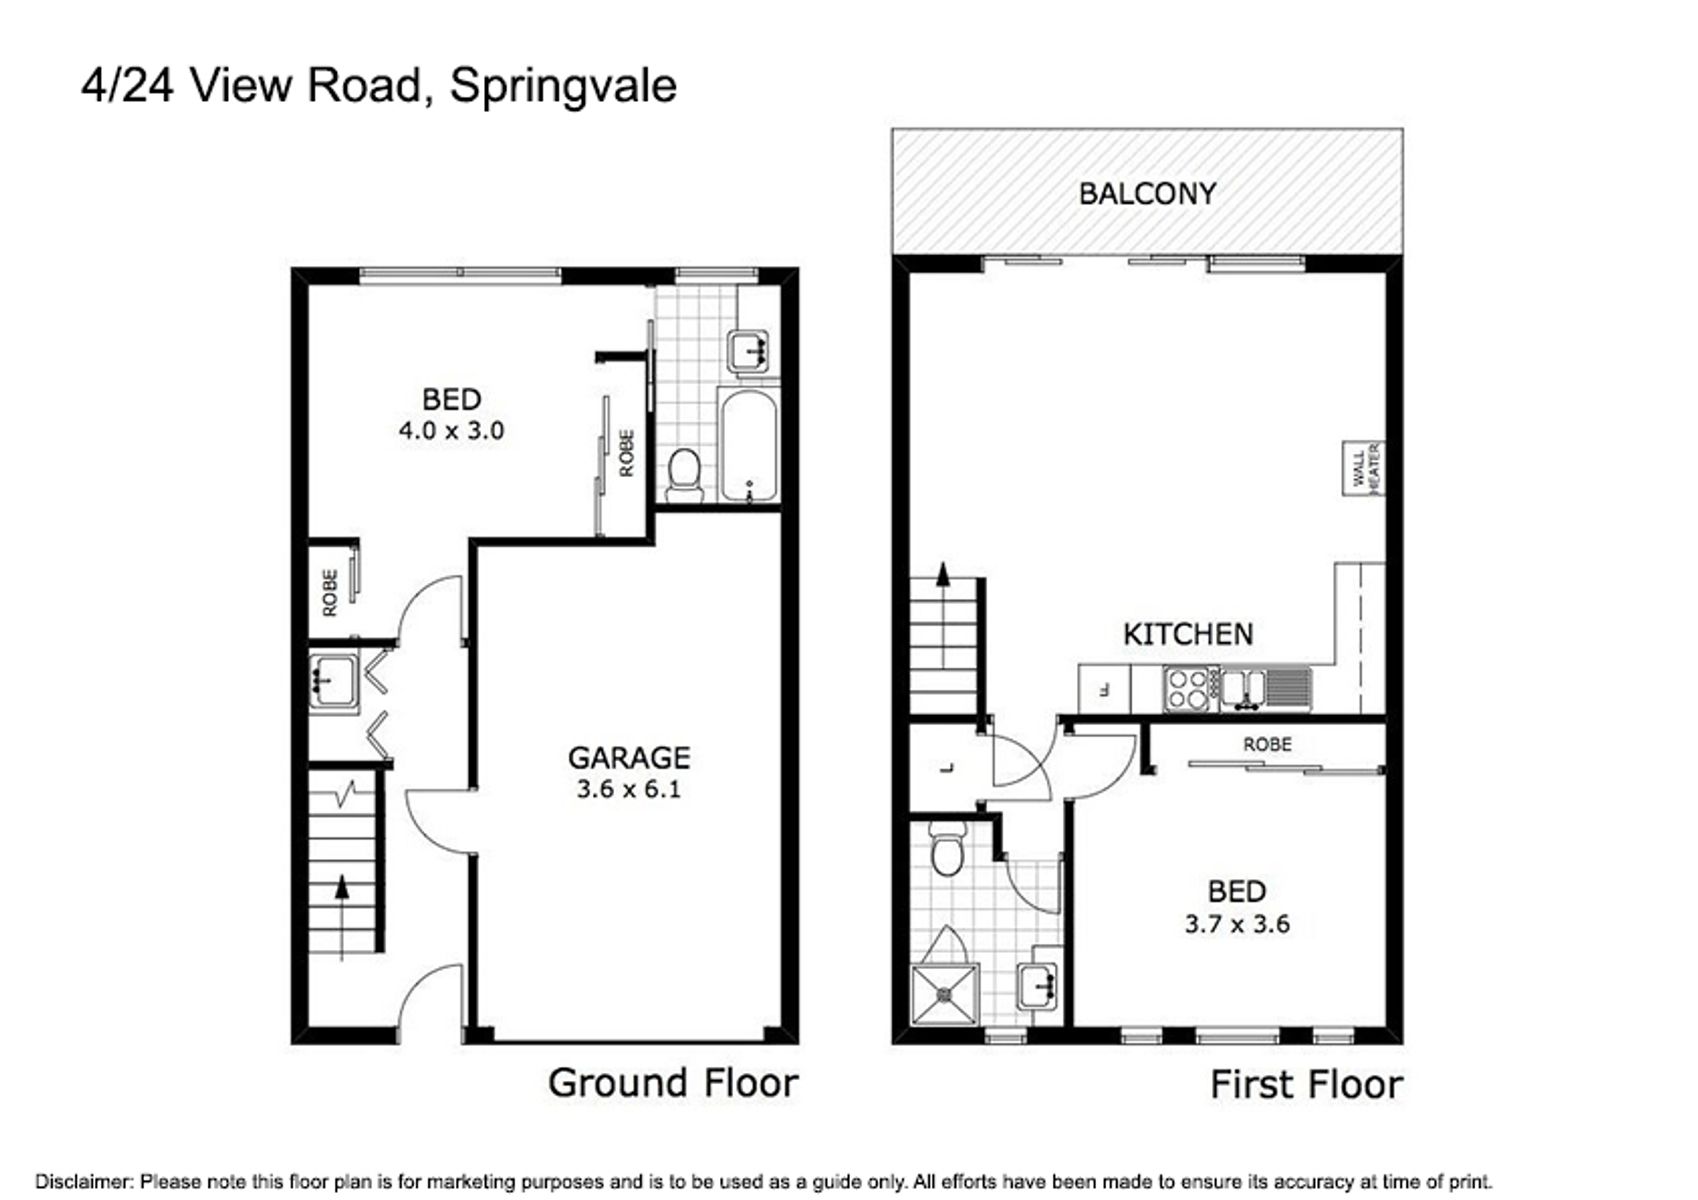 4 24 View Road Sprinvale Floor Plan